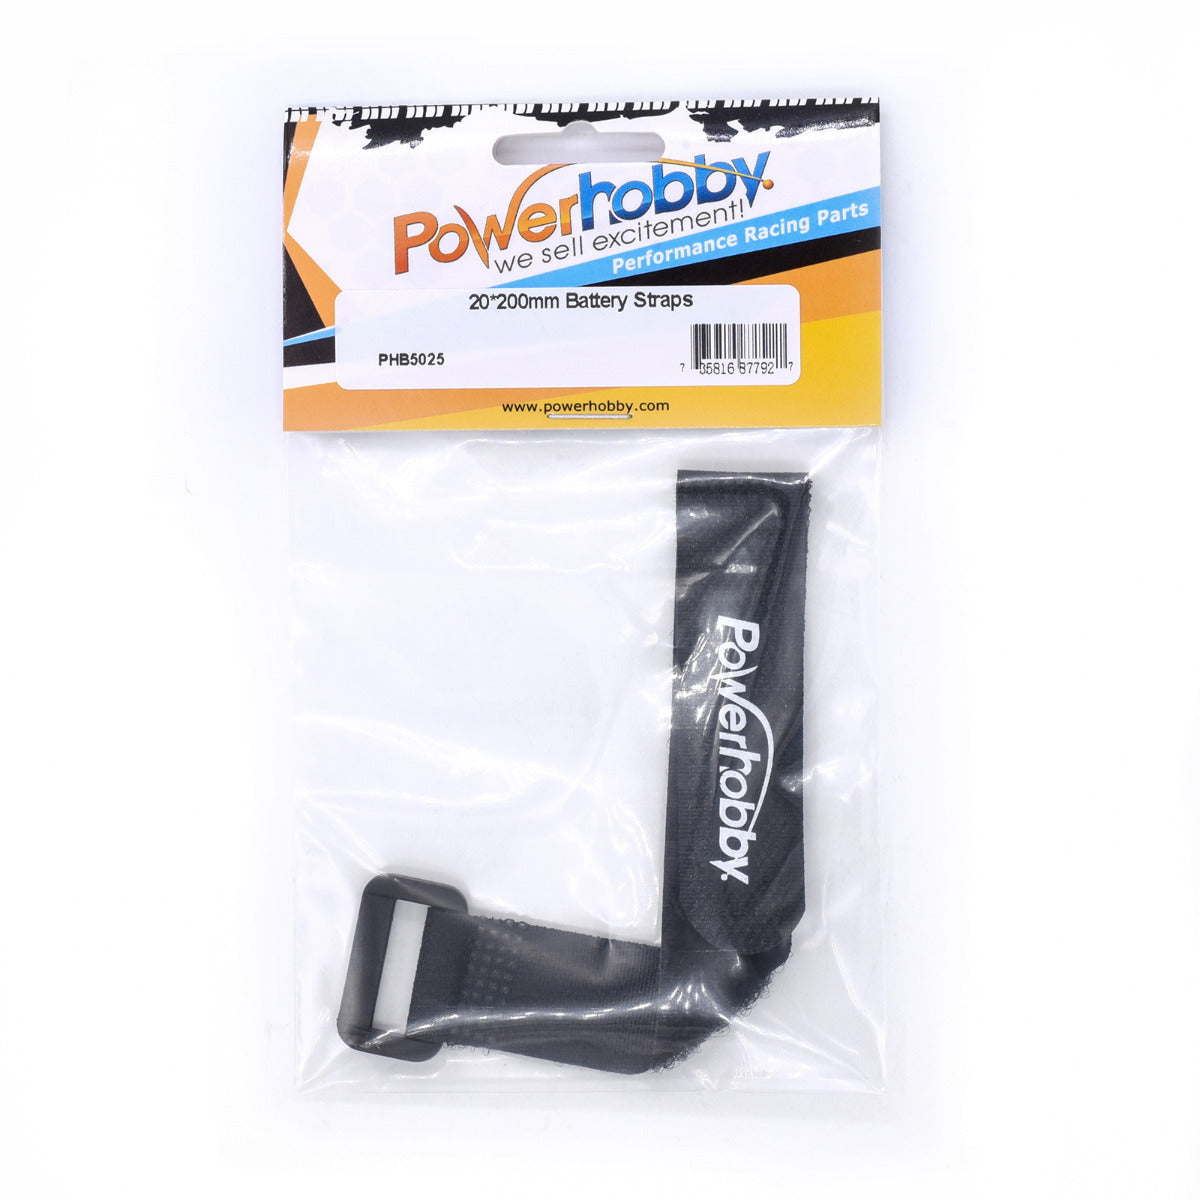 Powerhobby 20*200mm Battery Straps - PowerHobby